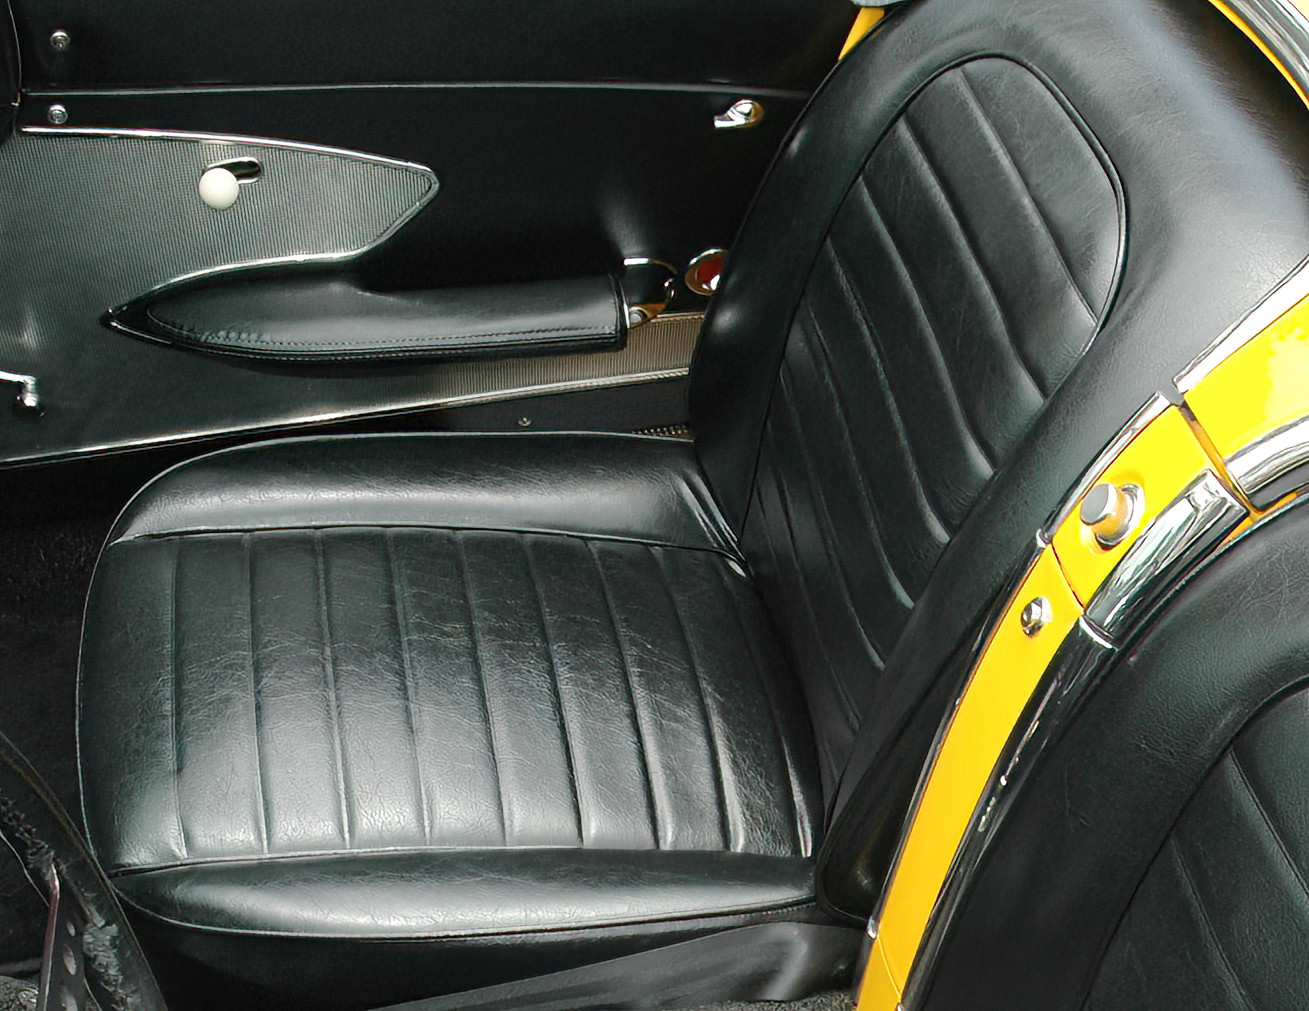 1959 Corvette seats